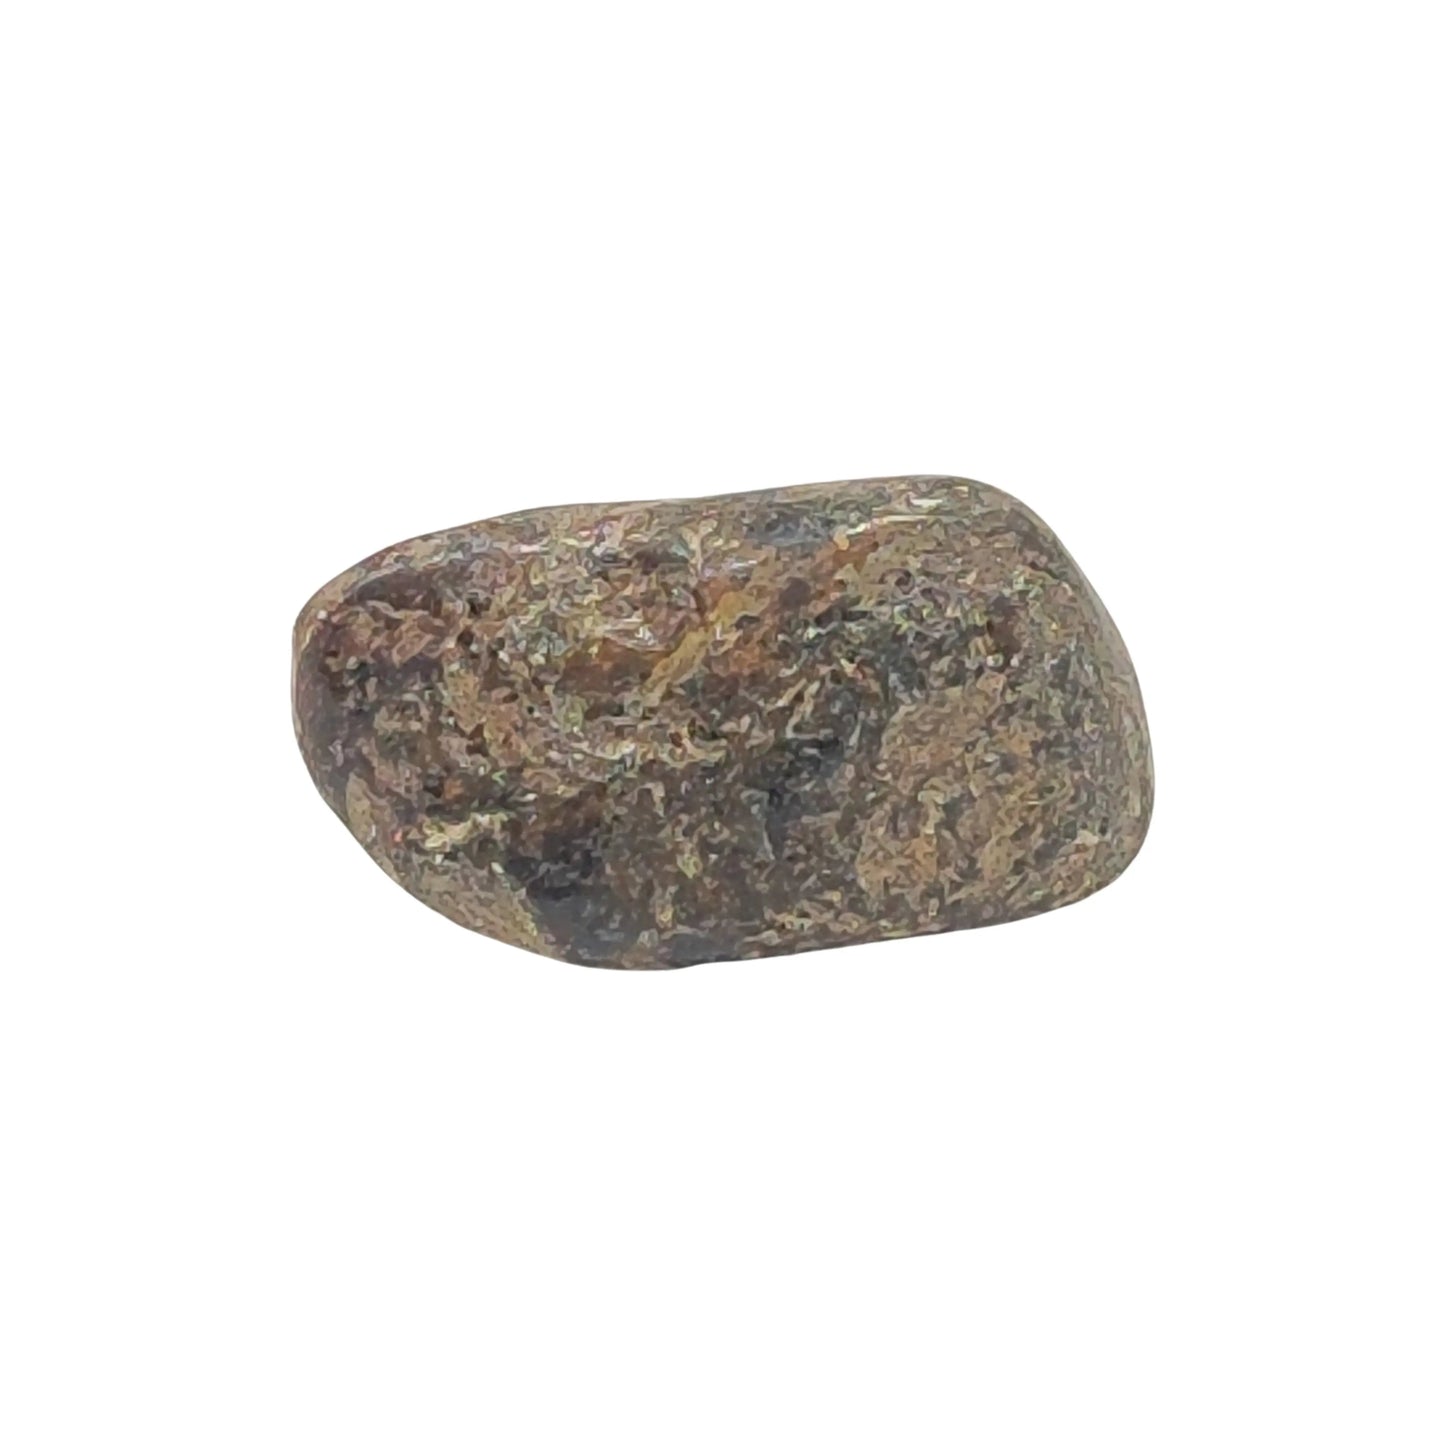 Stone -Bronzite -Tumbled -Fossil Specimen -Aromes Evasions 